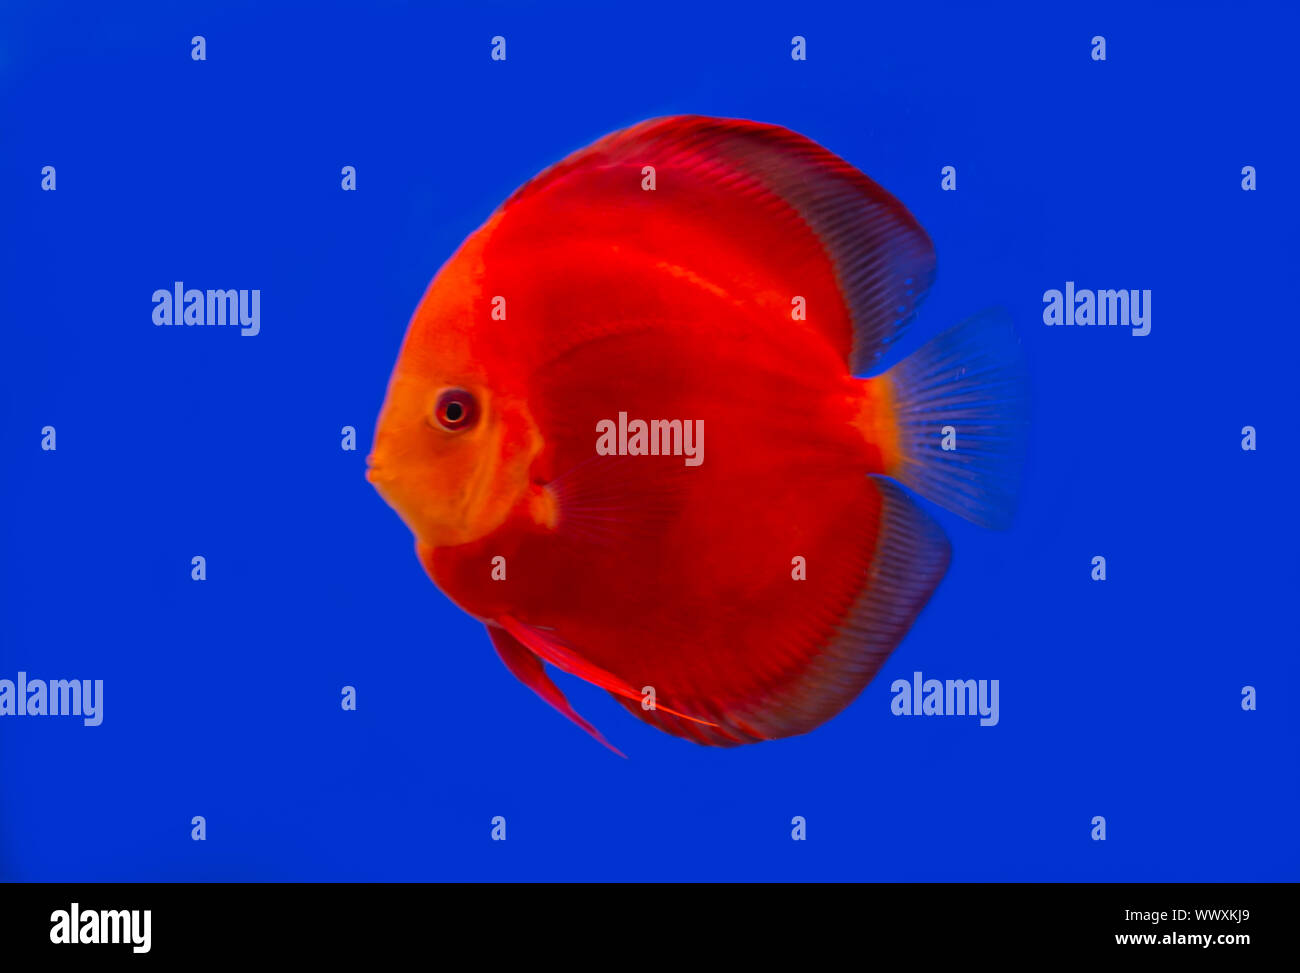 Red Melon discus fish on blue background aquarium Stock Photo